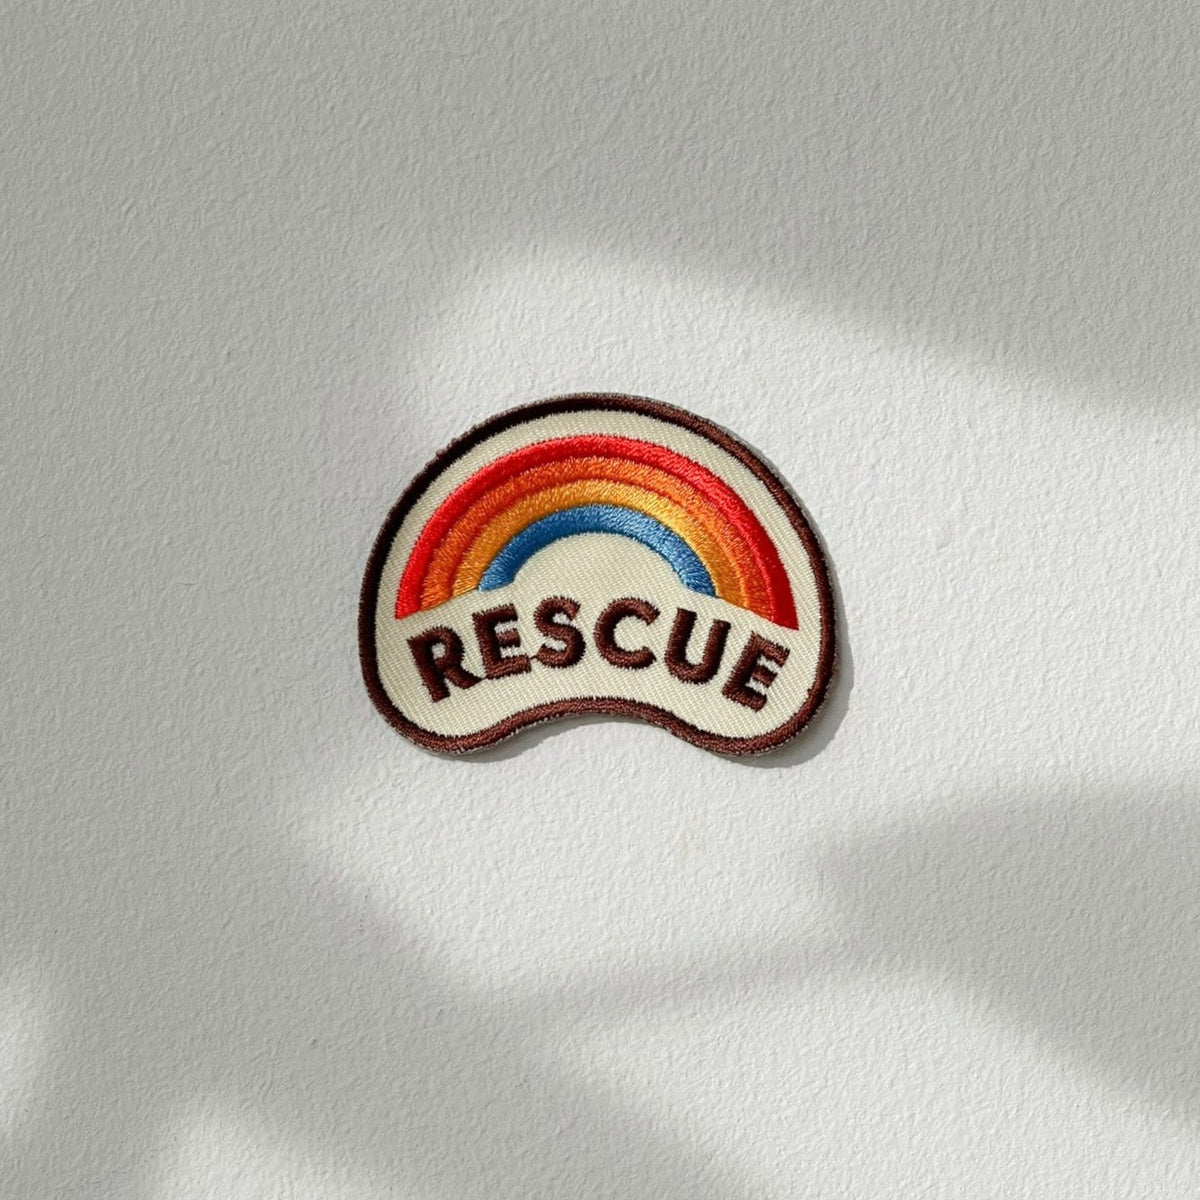 Rescue - Iron-on Patch - FURLOU 